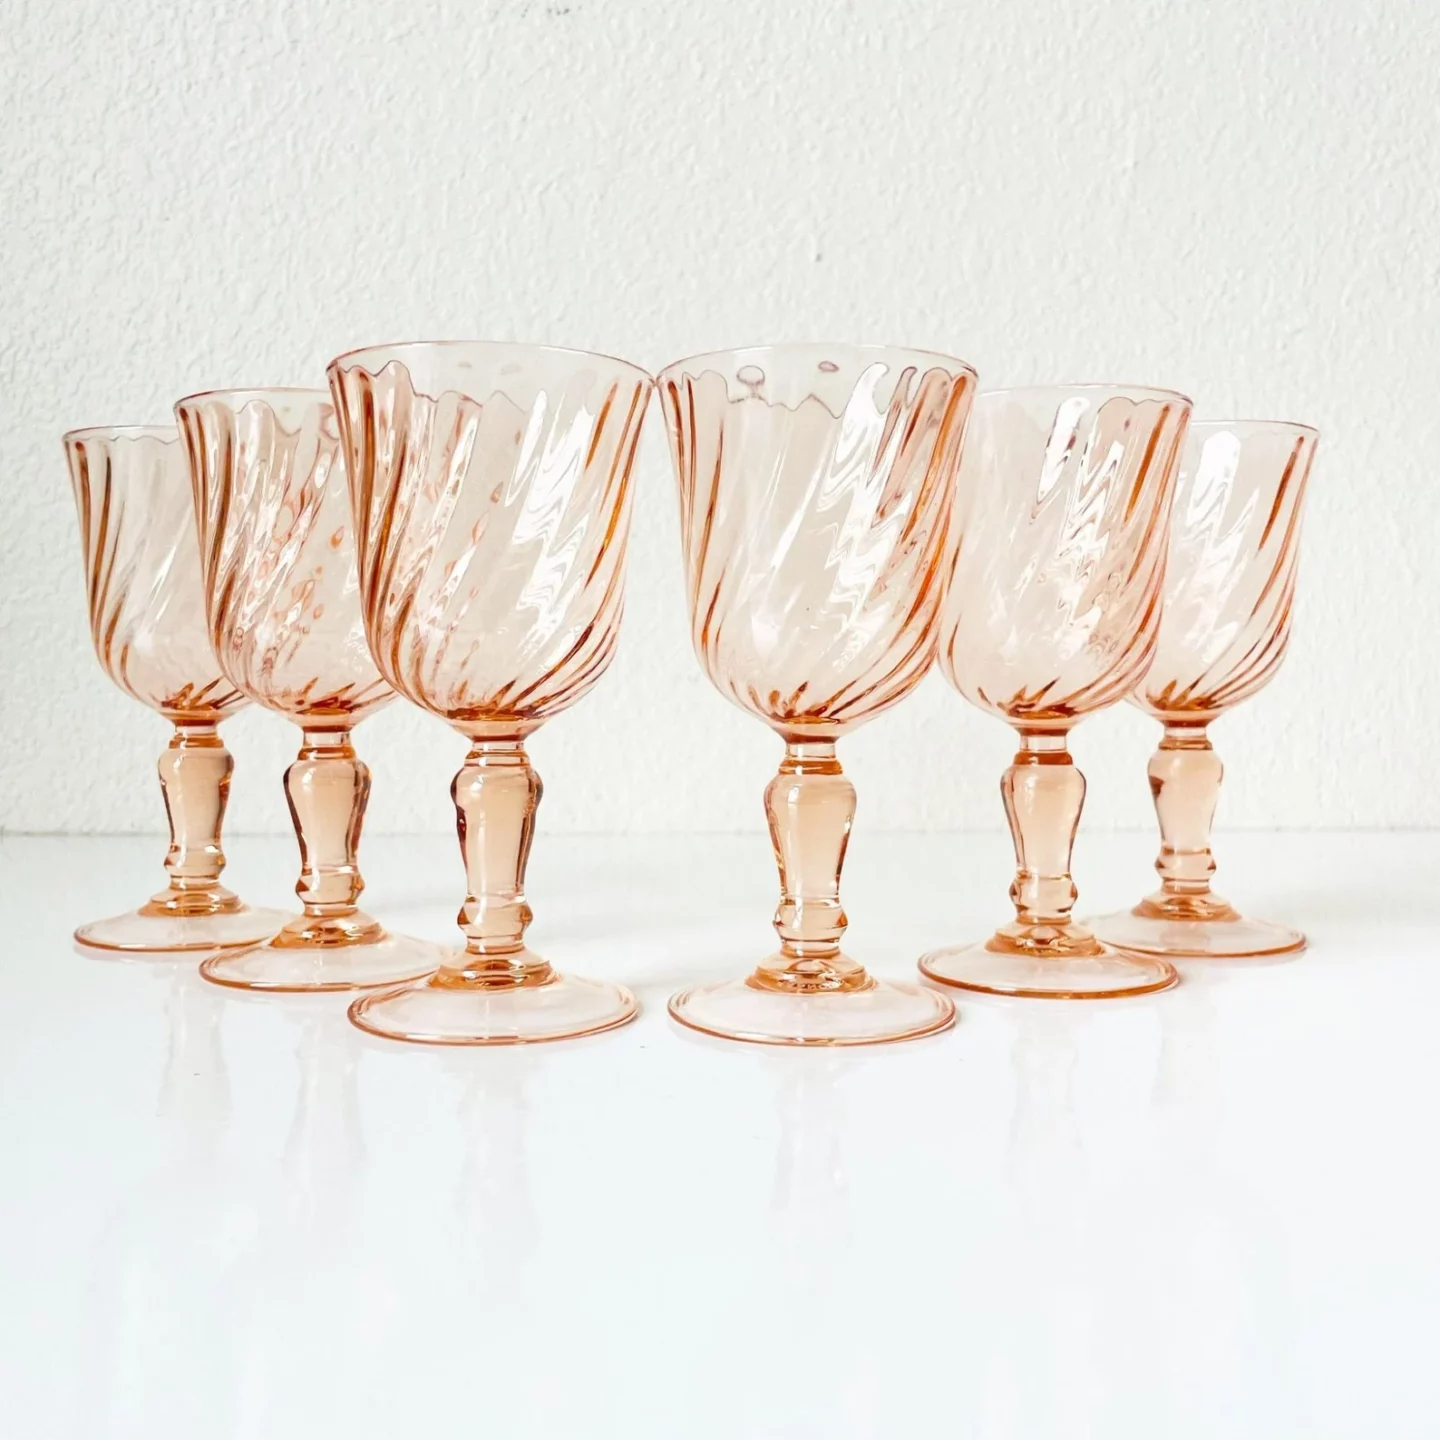 Set of six rose colored wine glasses